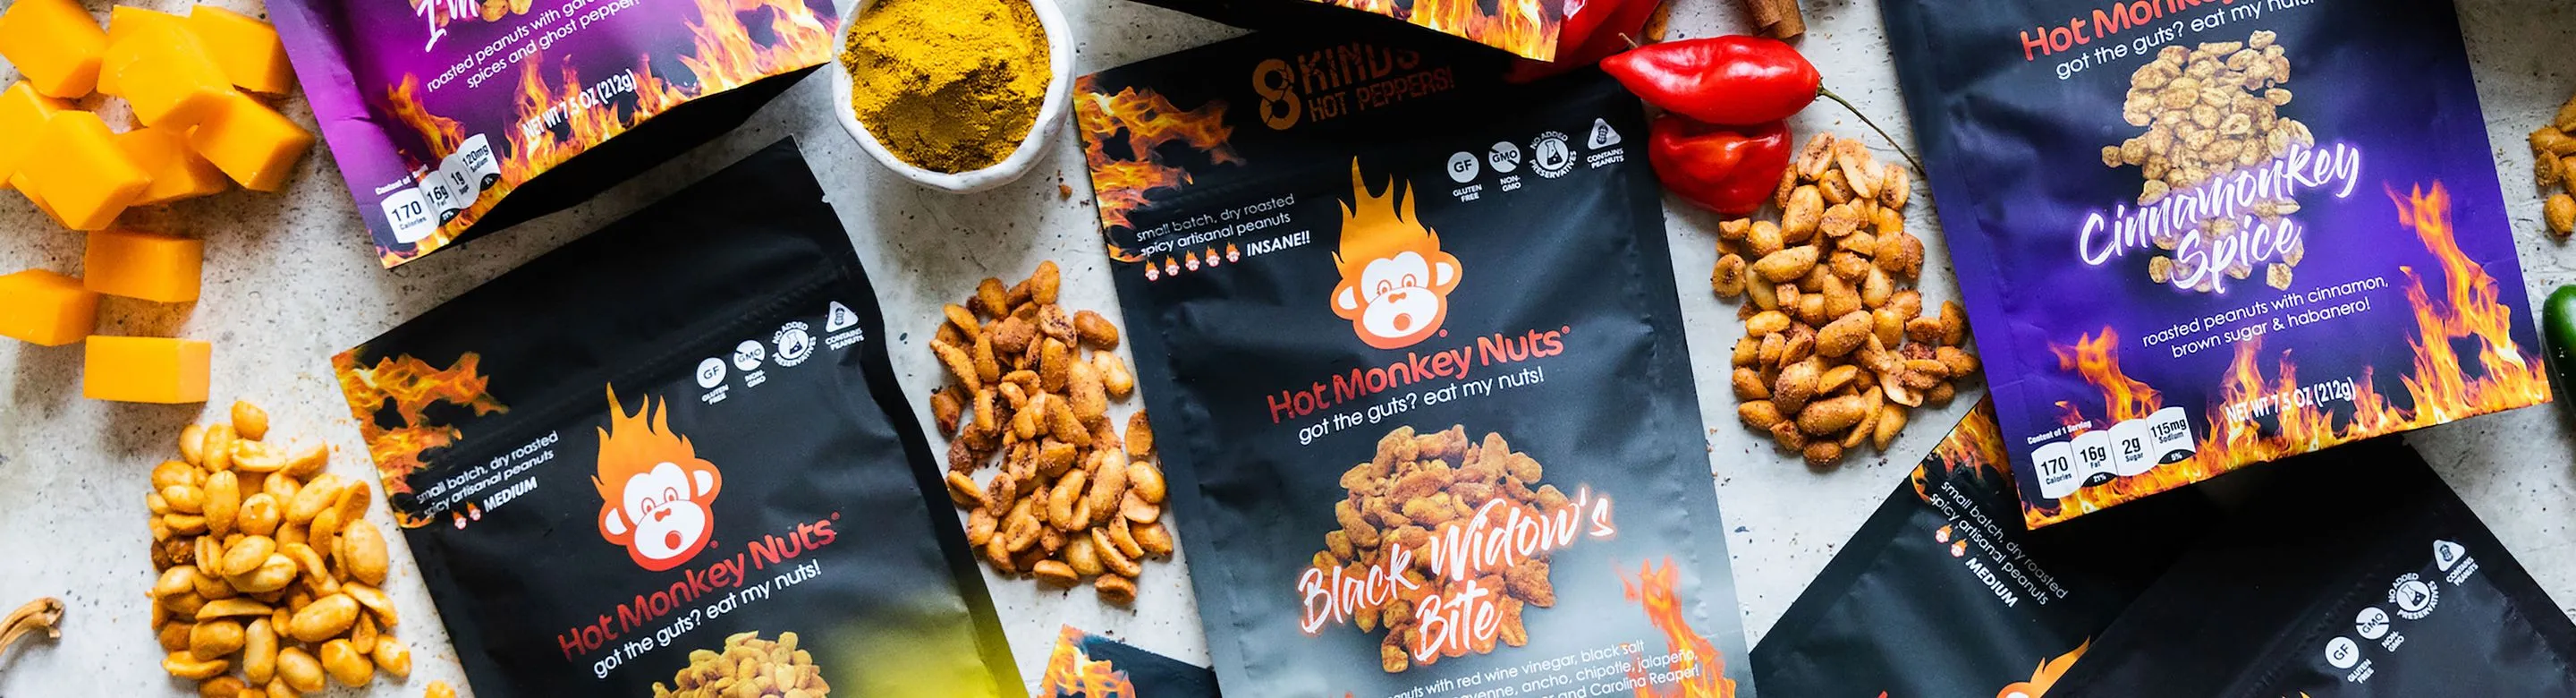 Hot Monkey Nuts